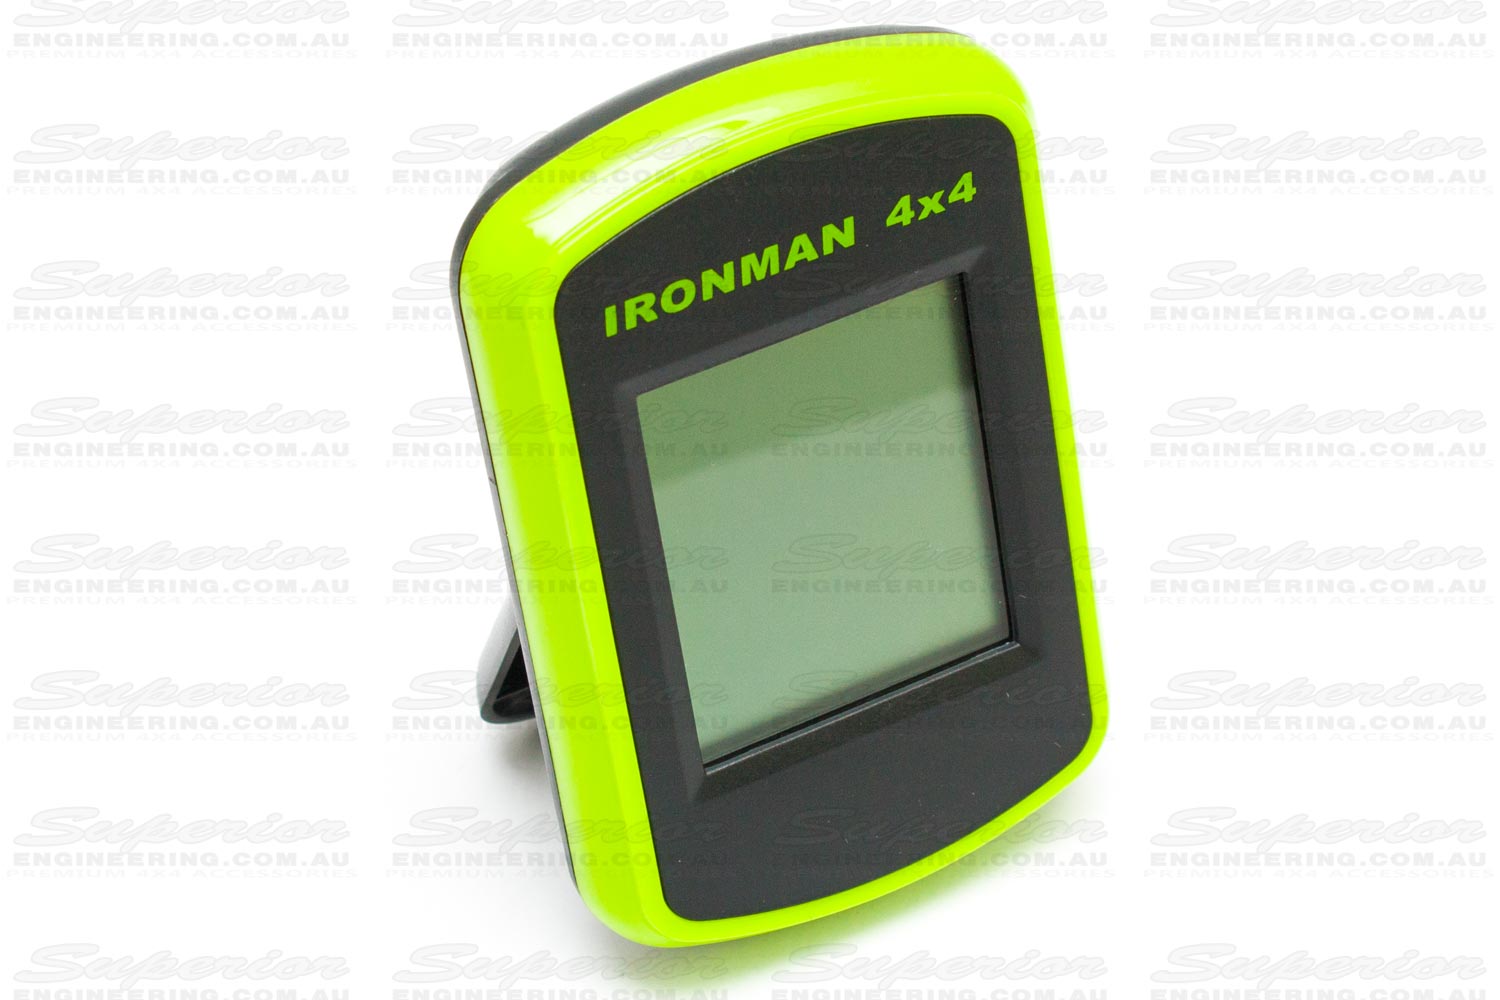 Ironman 4x4 Wireless Fridge Thermometer - Left Side View